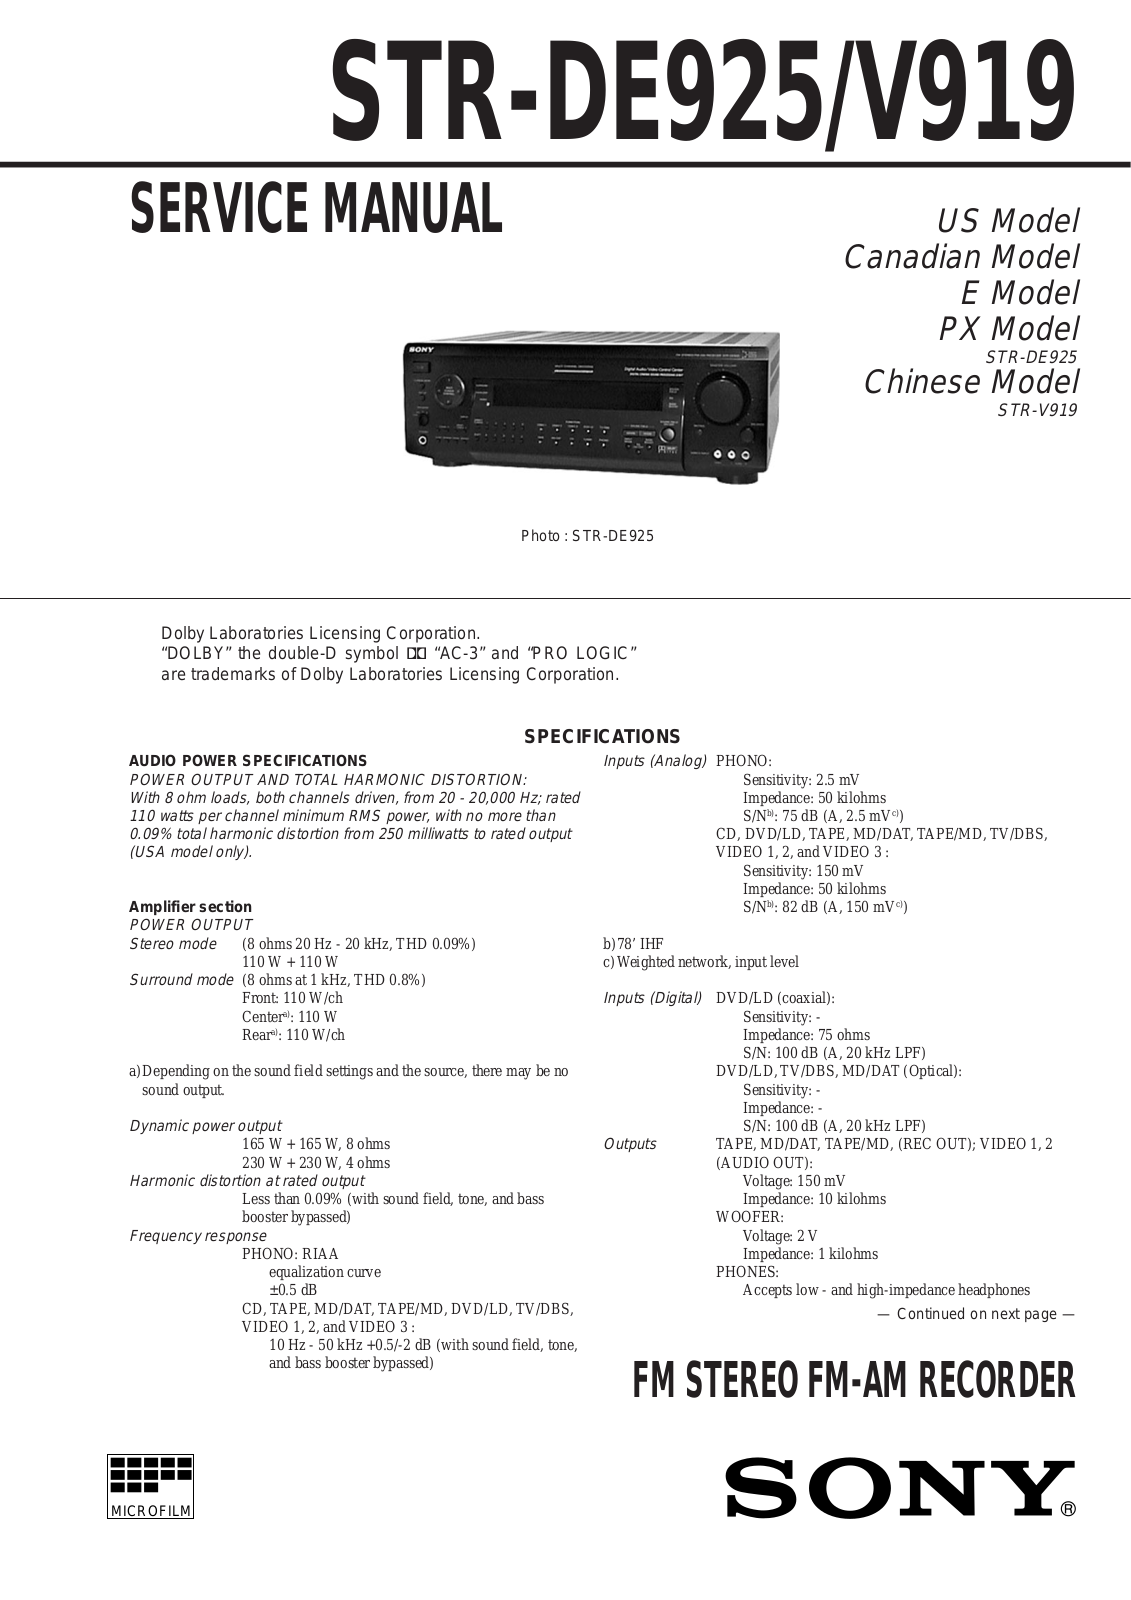 Sony STR-V919 Service Manual